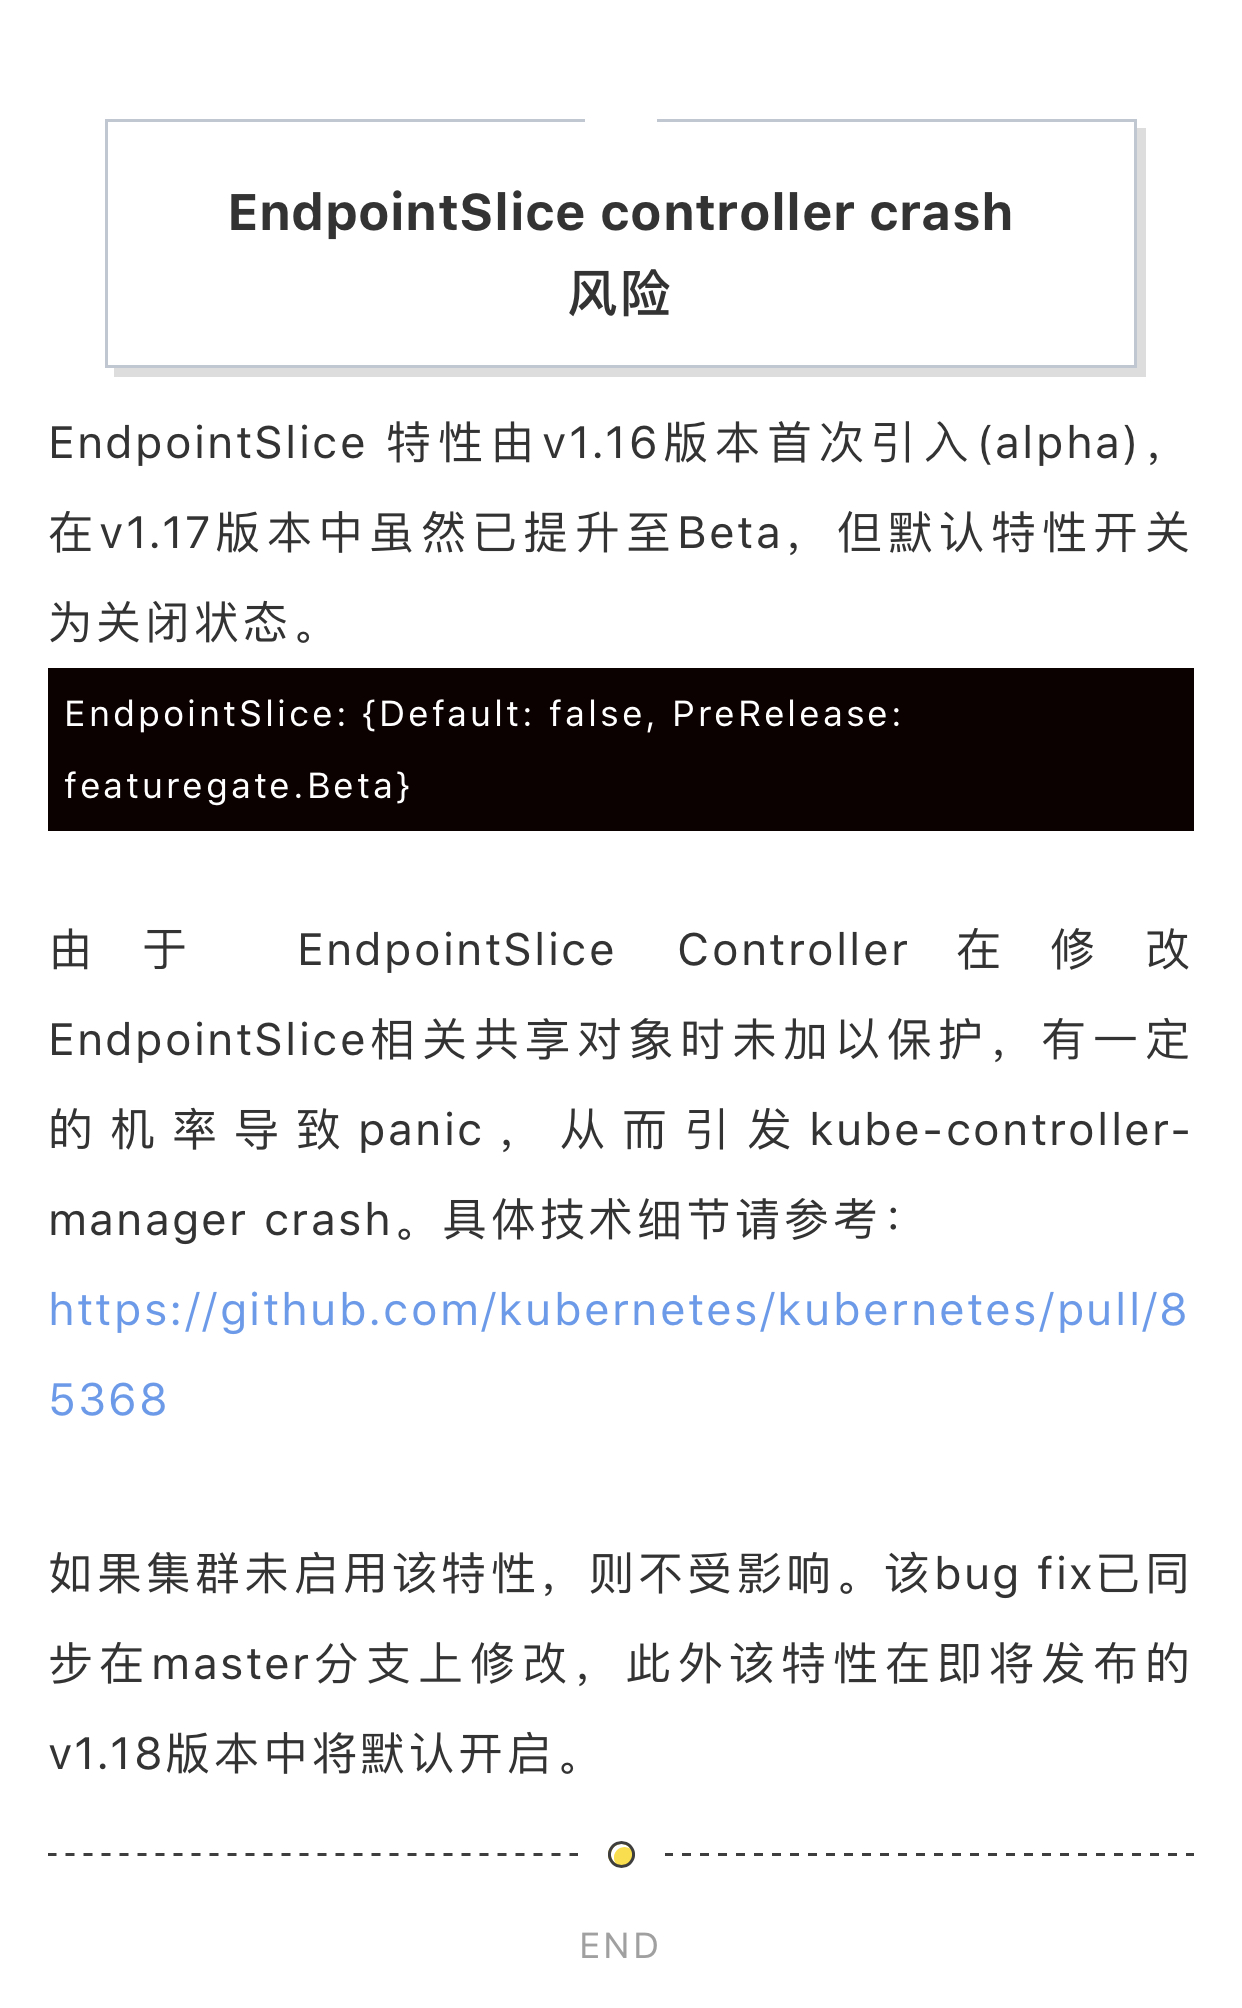 引入EndpointSlice功能会导致 Controller Manager 几率性的 Panic